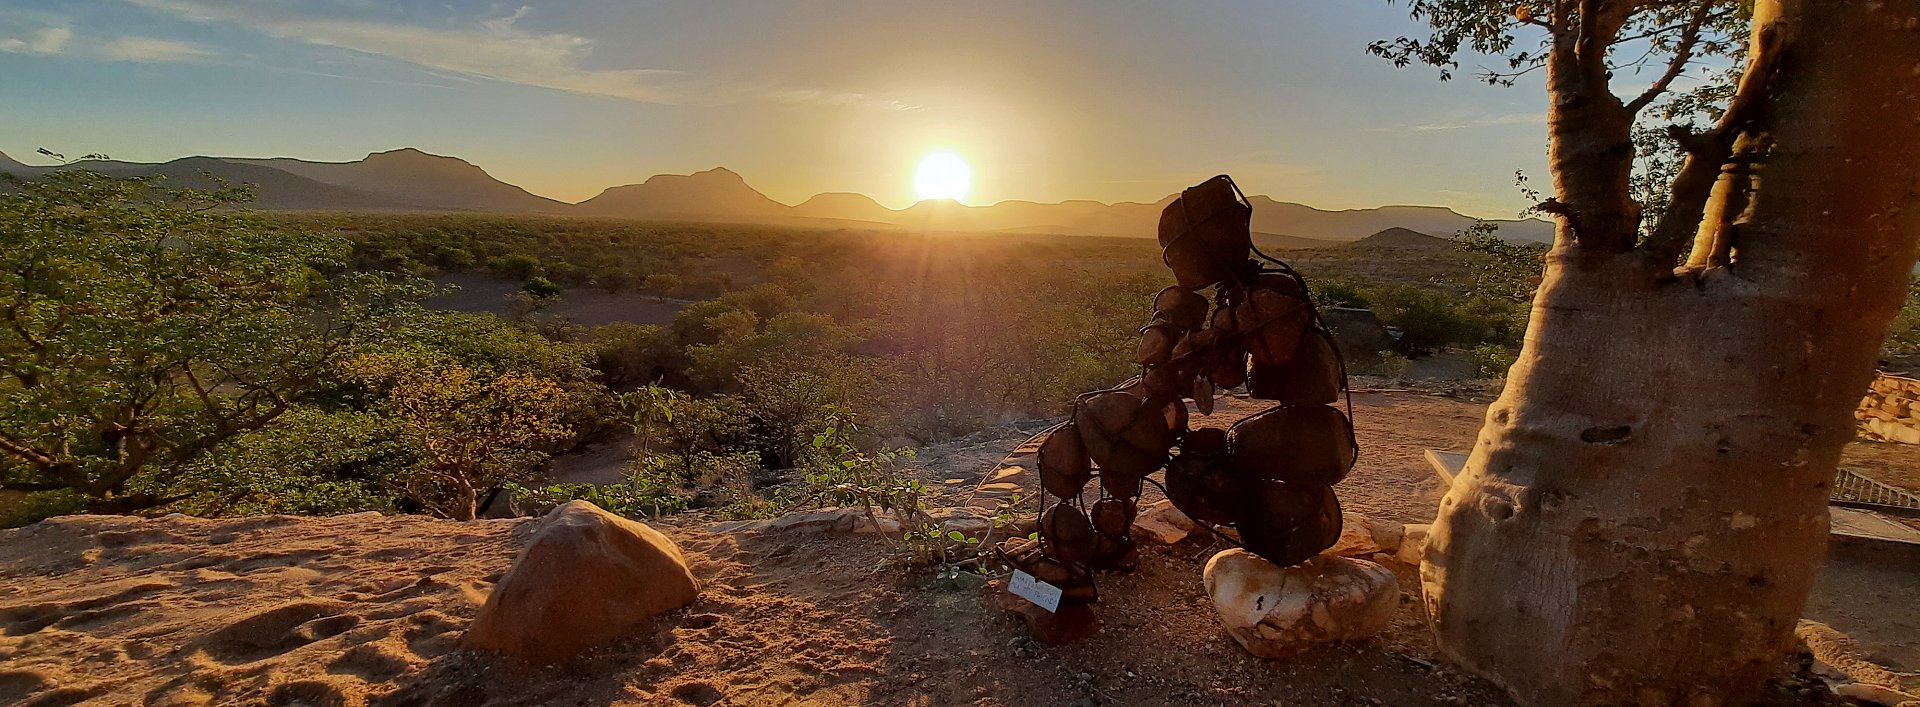 bushbundu-car-rental-windhoek-namibia-image-of-rock-sculpture-in-the-desert